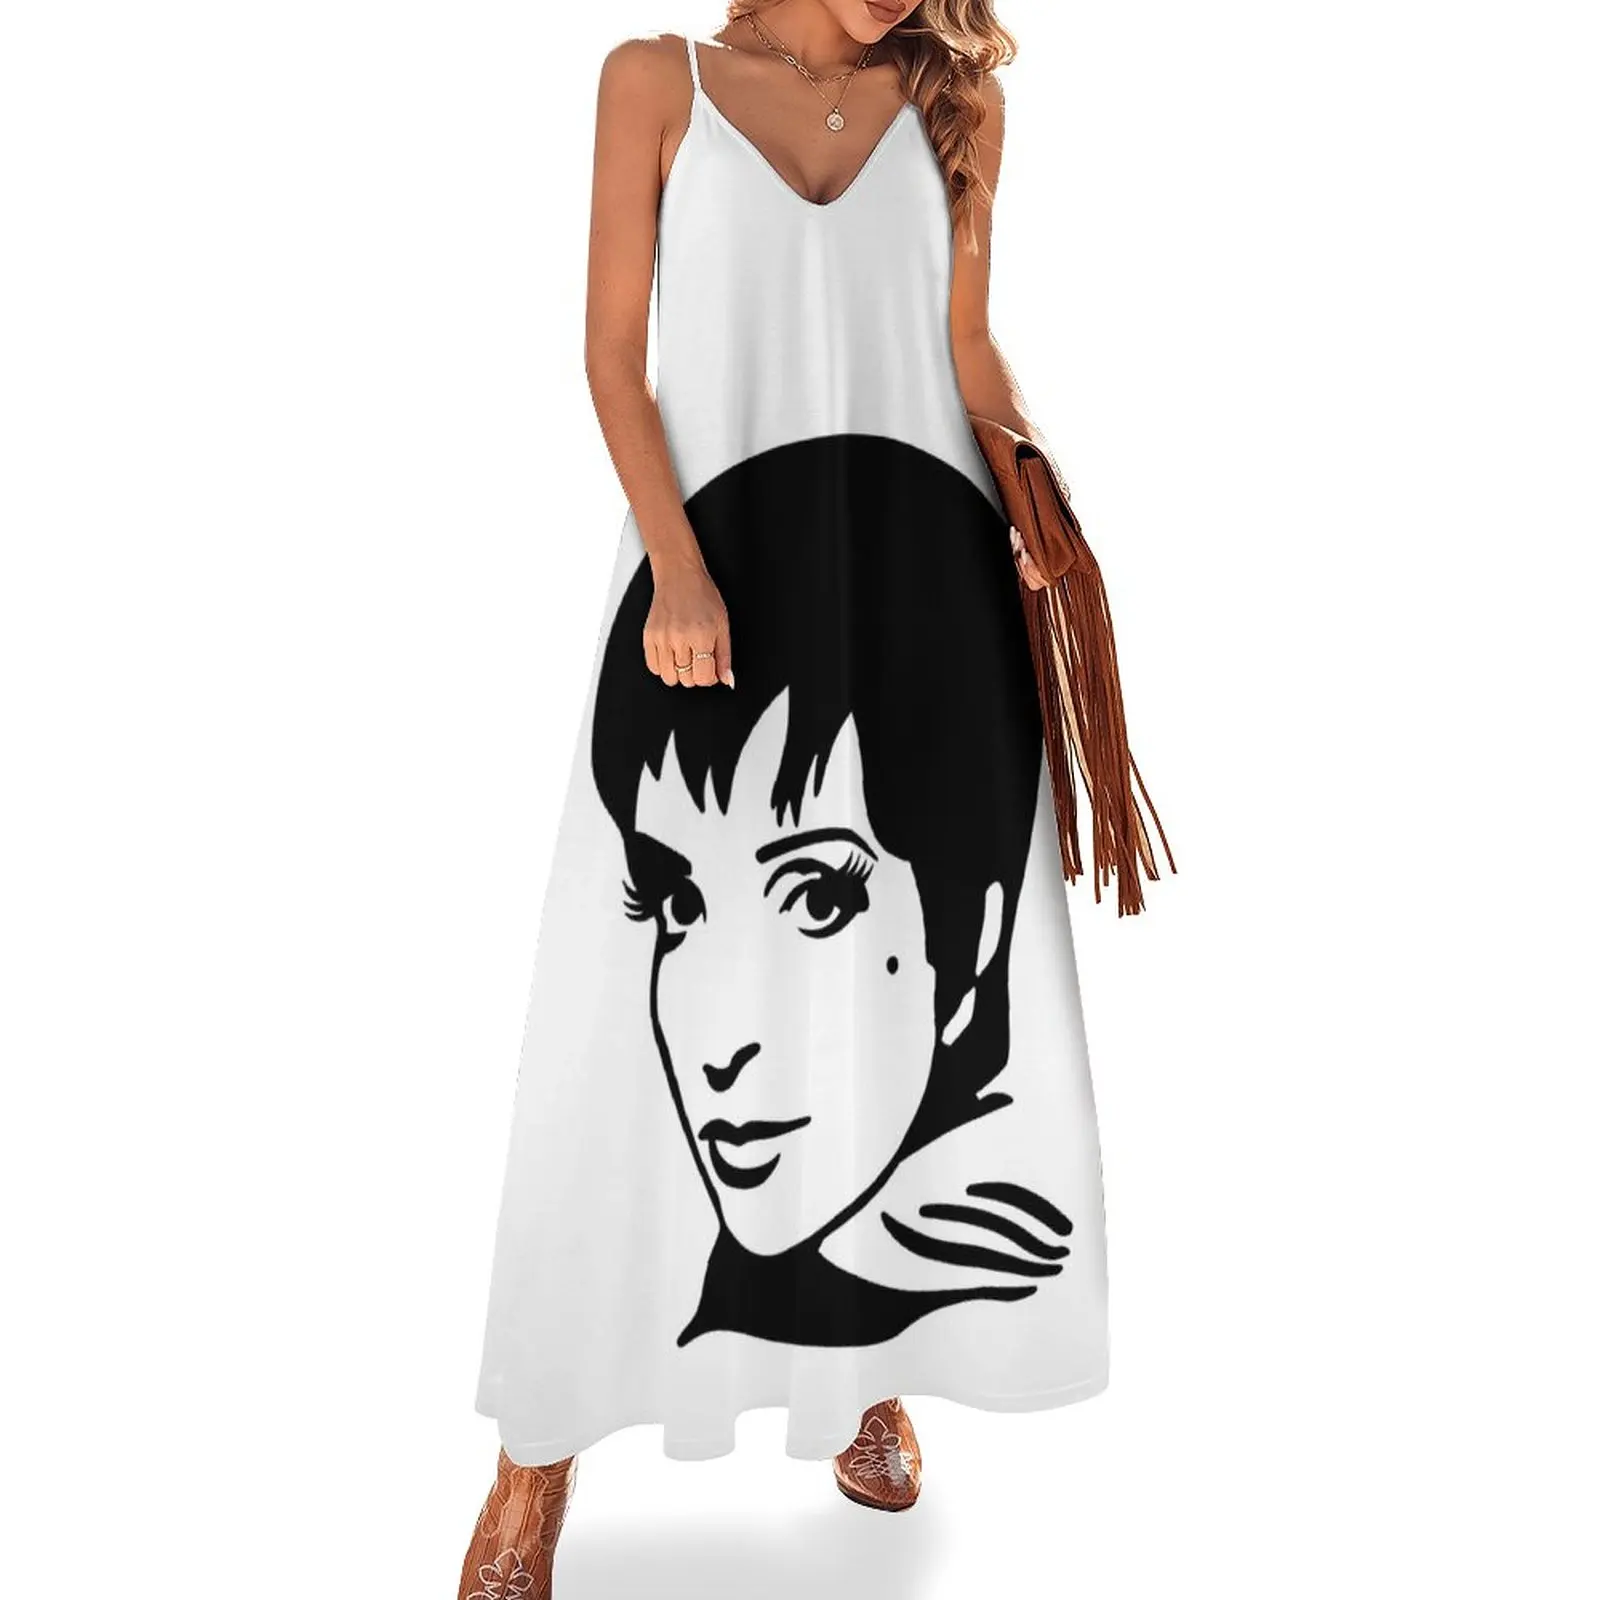 

Liza Minnelli Sleeveless Dress luxury dress Prom gown